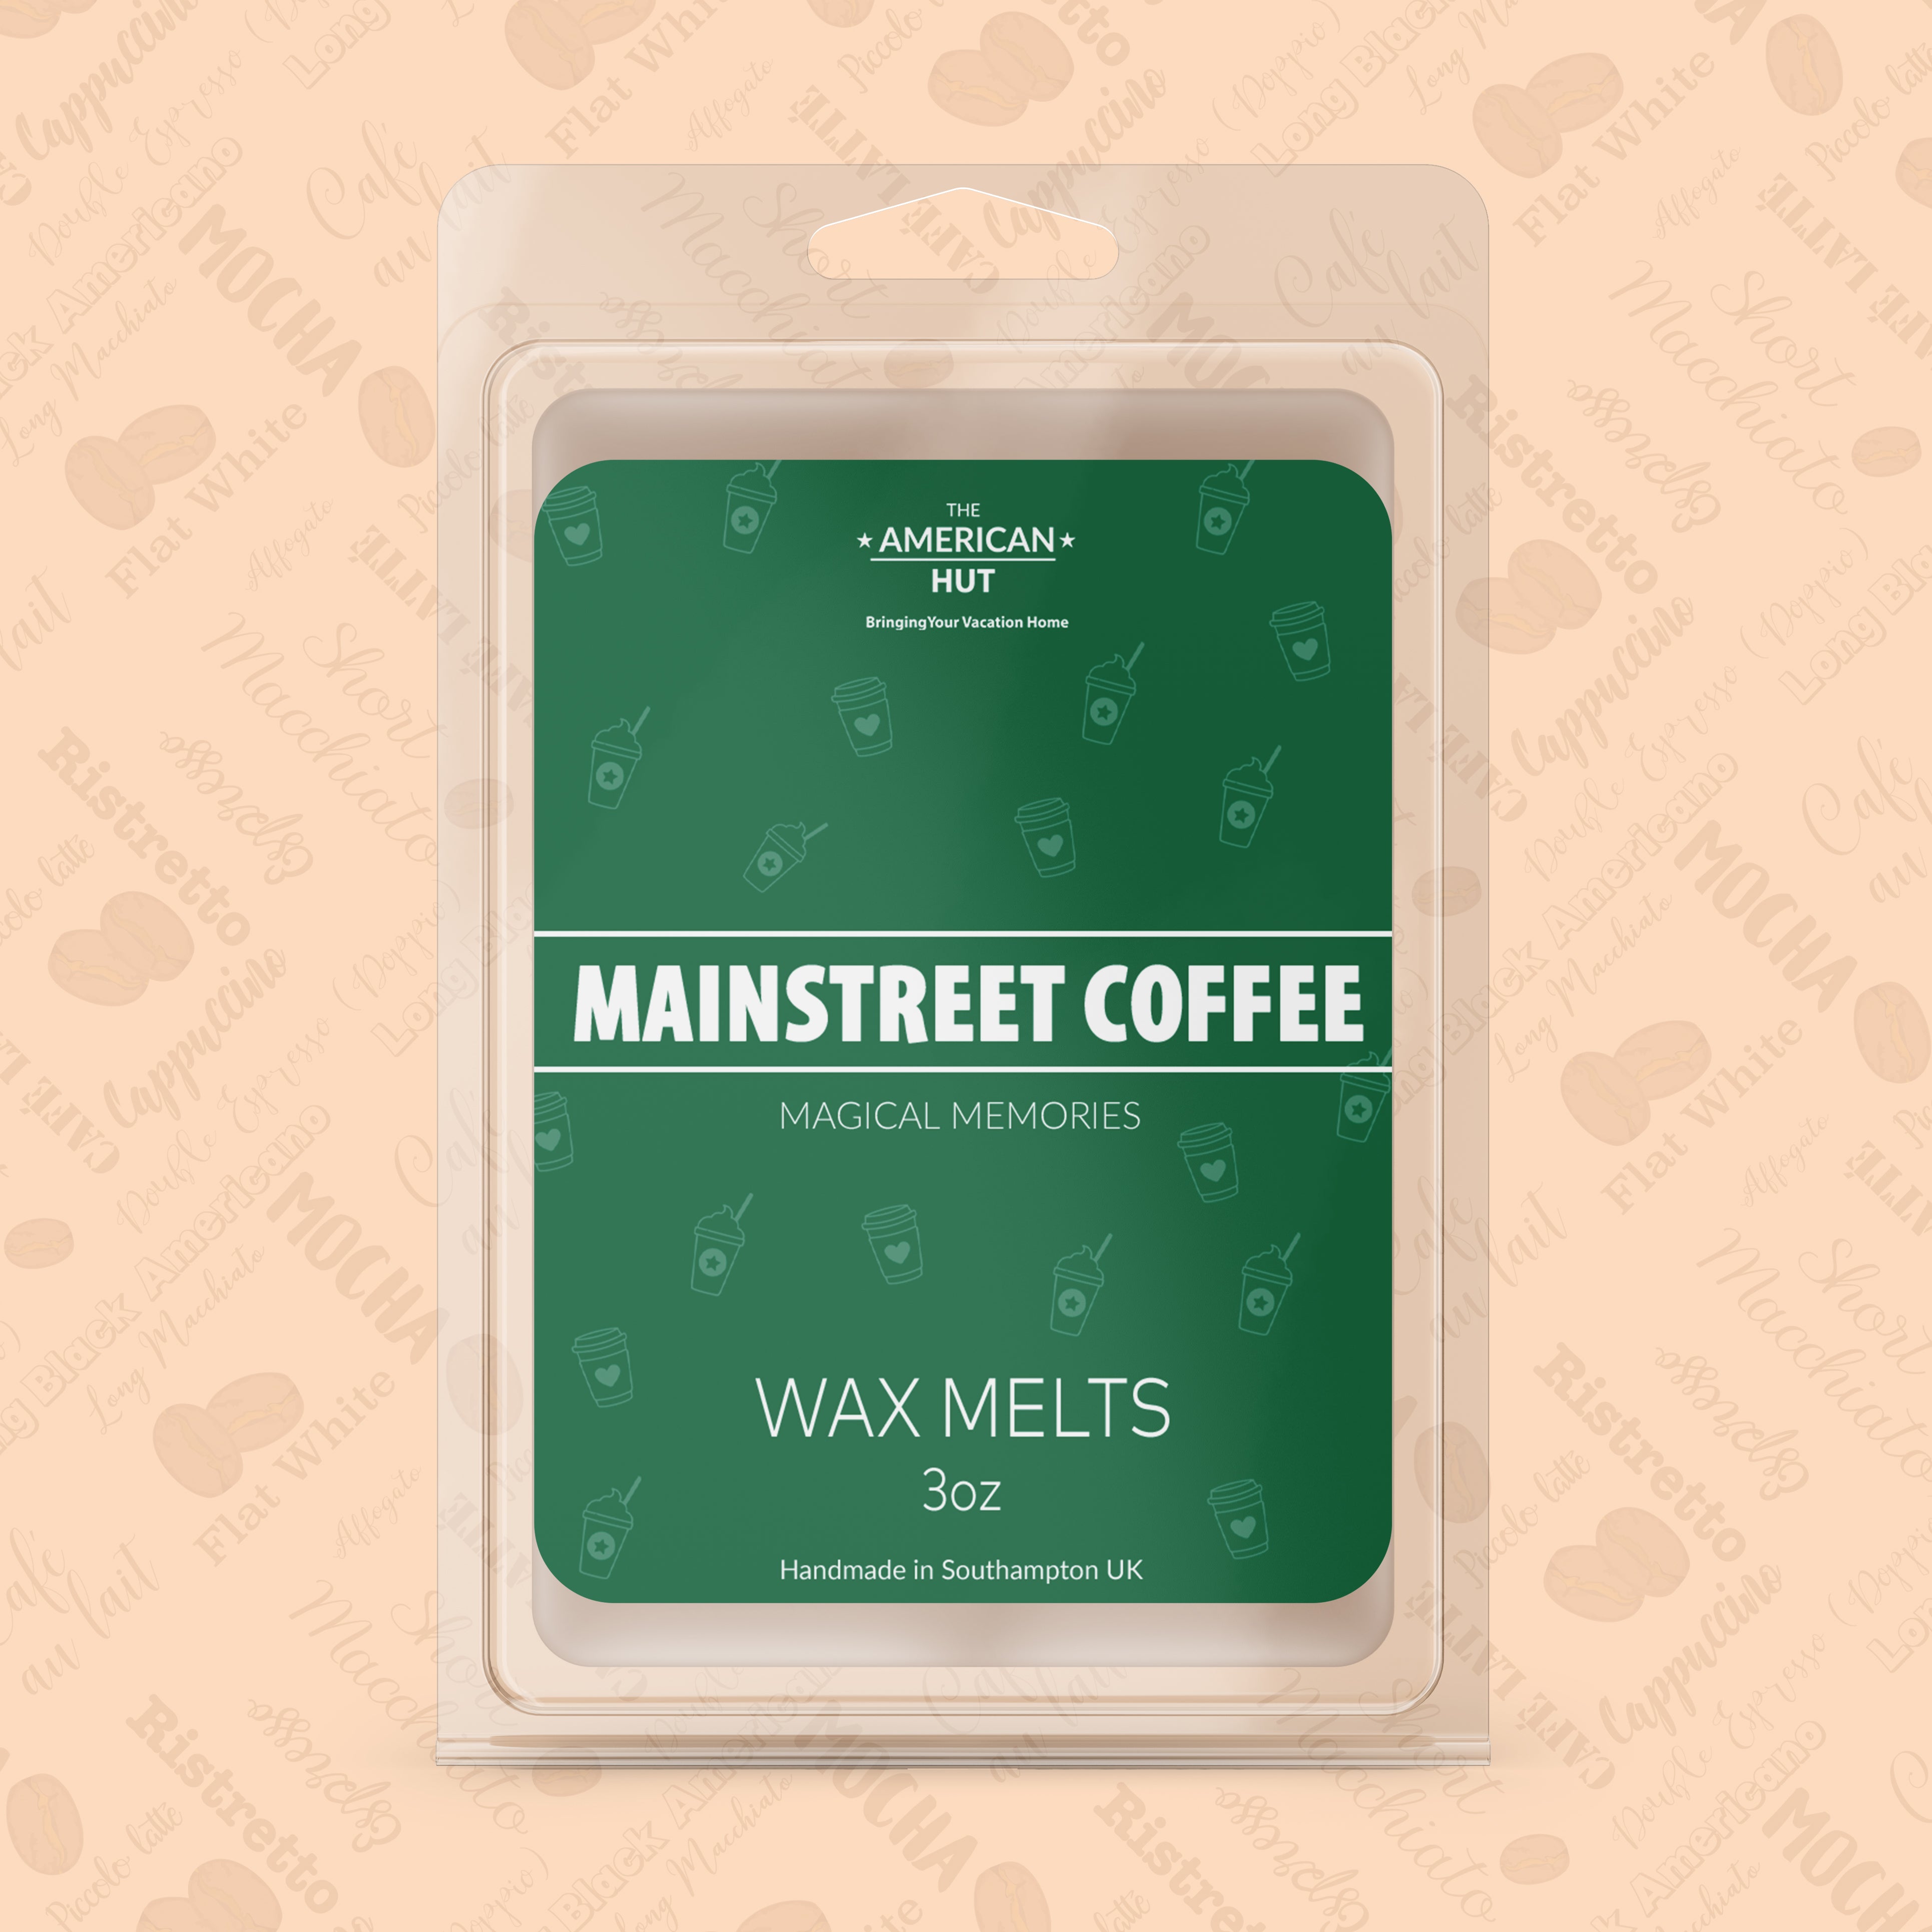 Mainstreet Coffee - Wax Melt